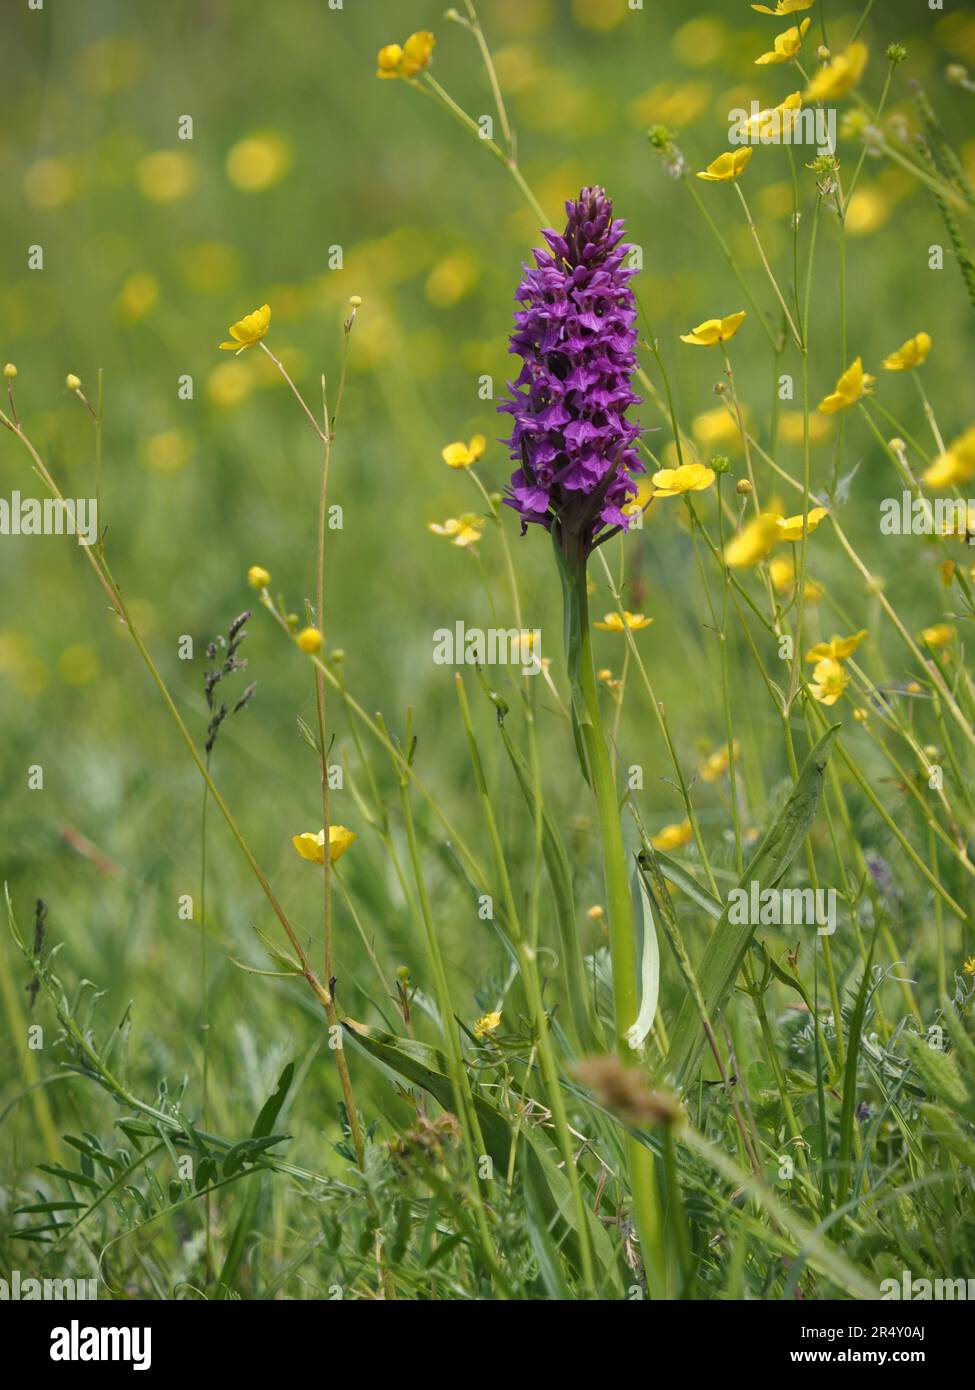 Marsh orchid growing alongside buttercups in wetland grasses Stock Photo